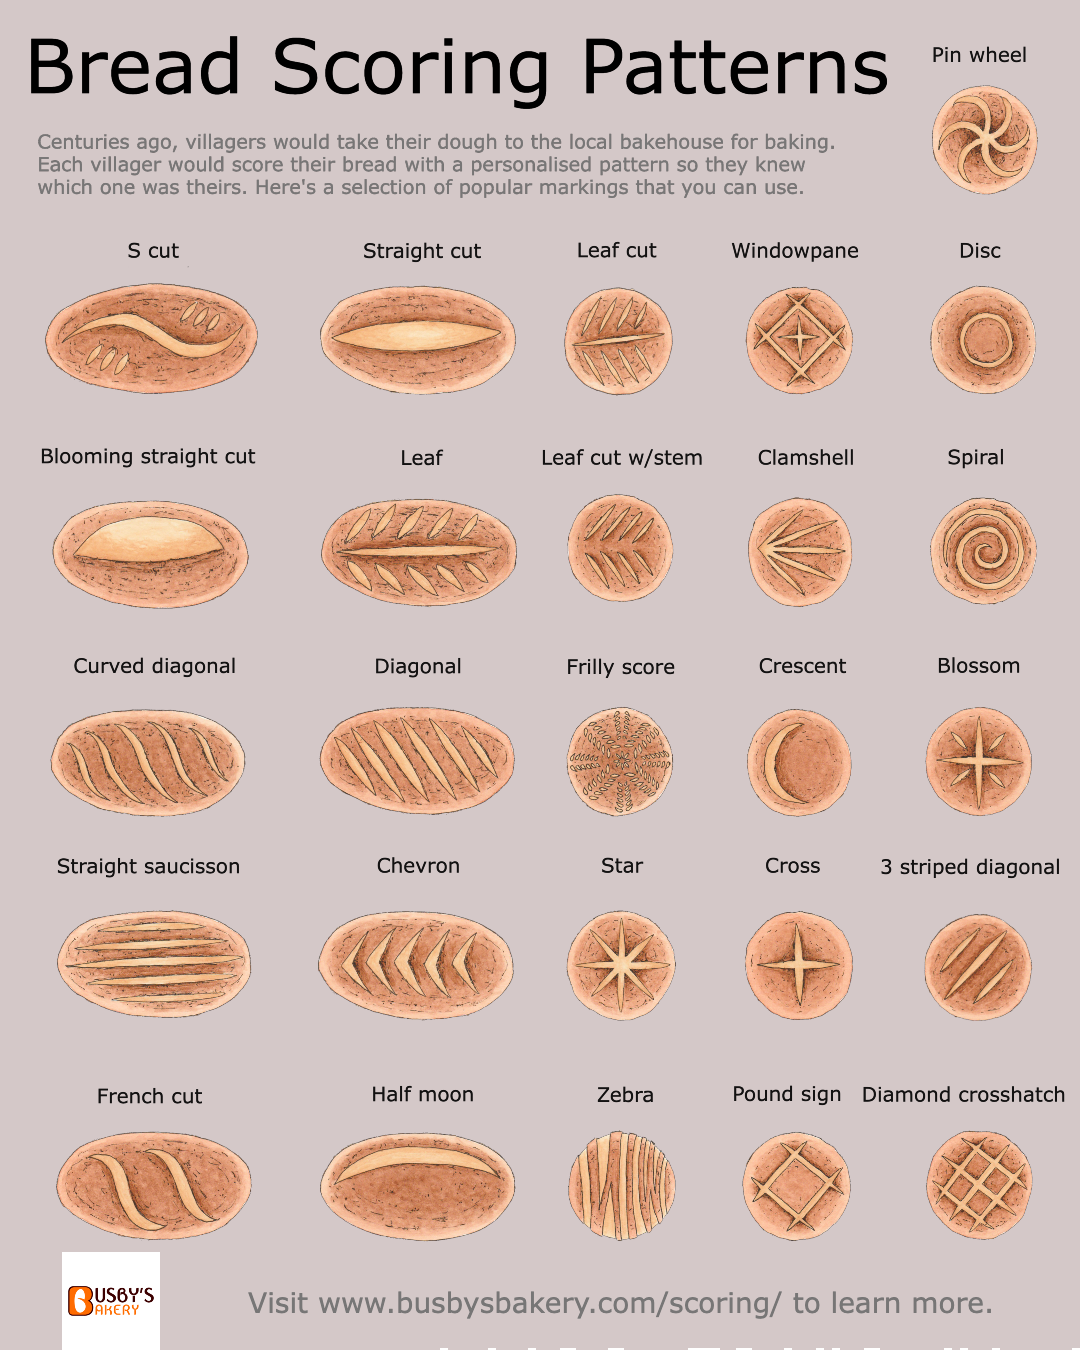 Bread scoring patterns